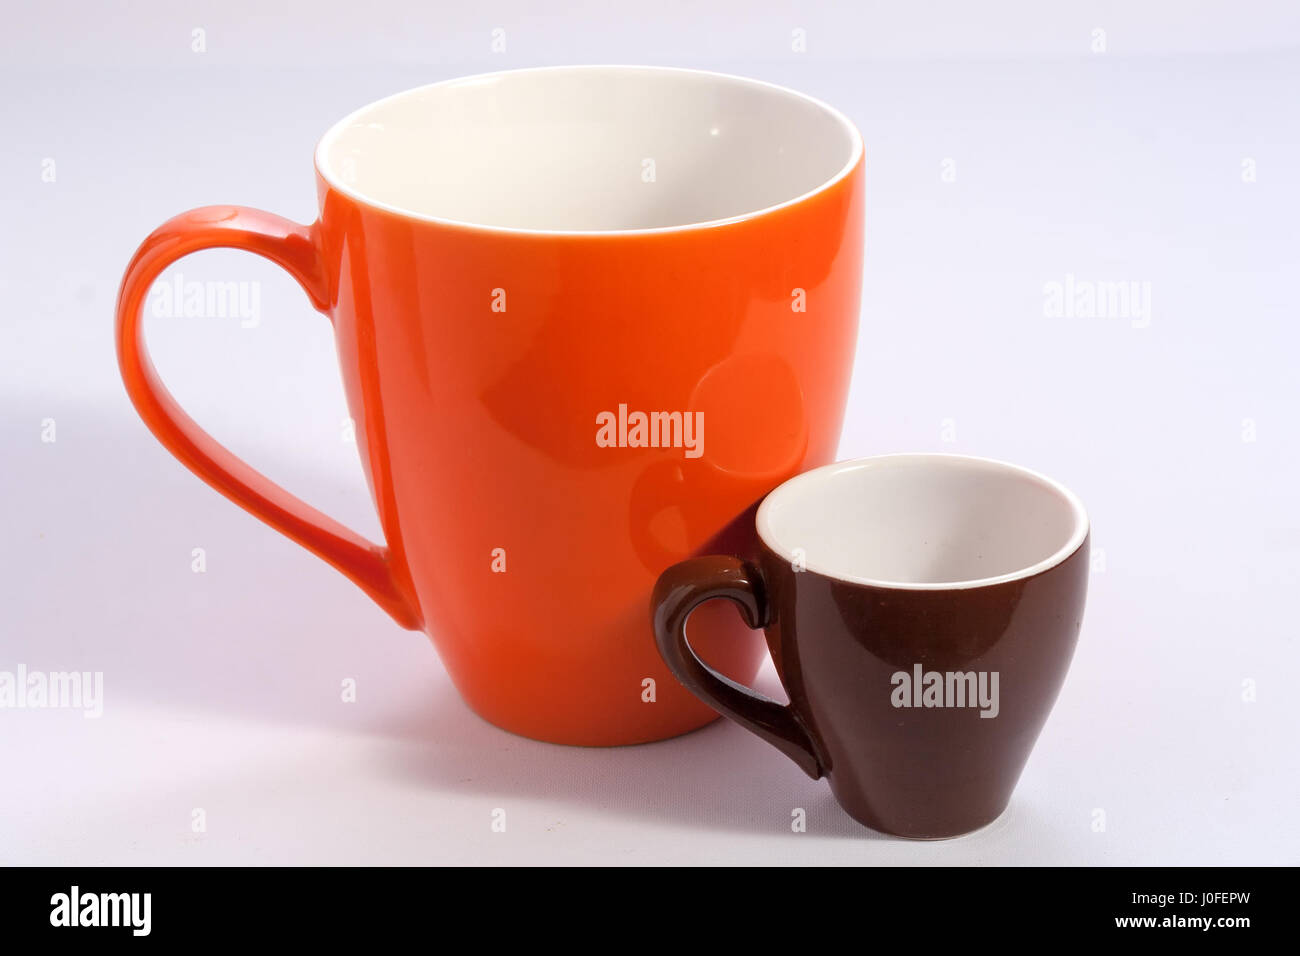 https://c8.alamy.com/comp/J0FEPW/two-cups-one-big-orange-and-one-small-brown-J0FEPW.jpg